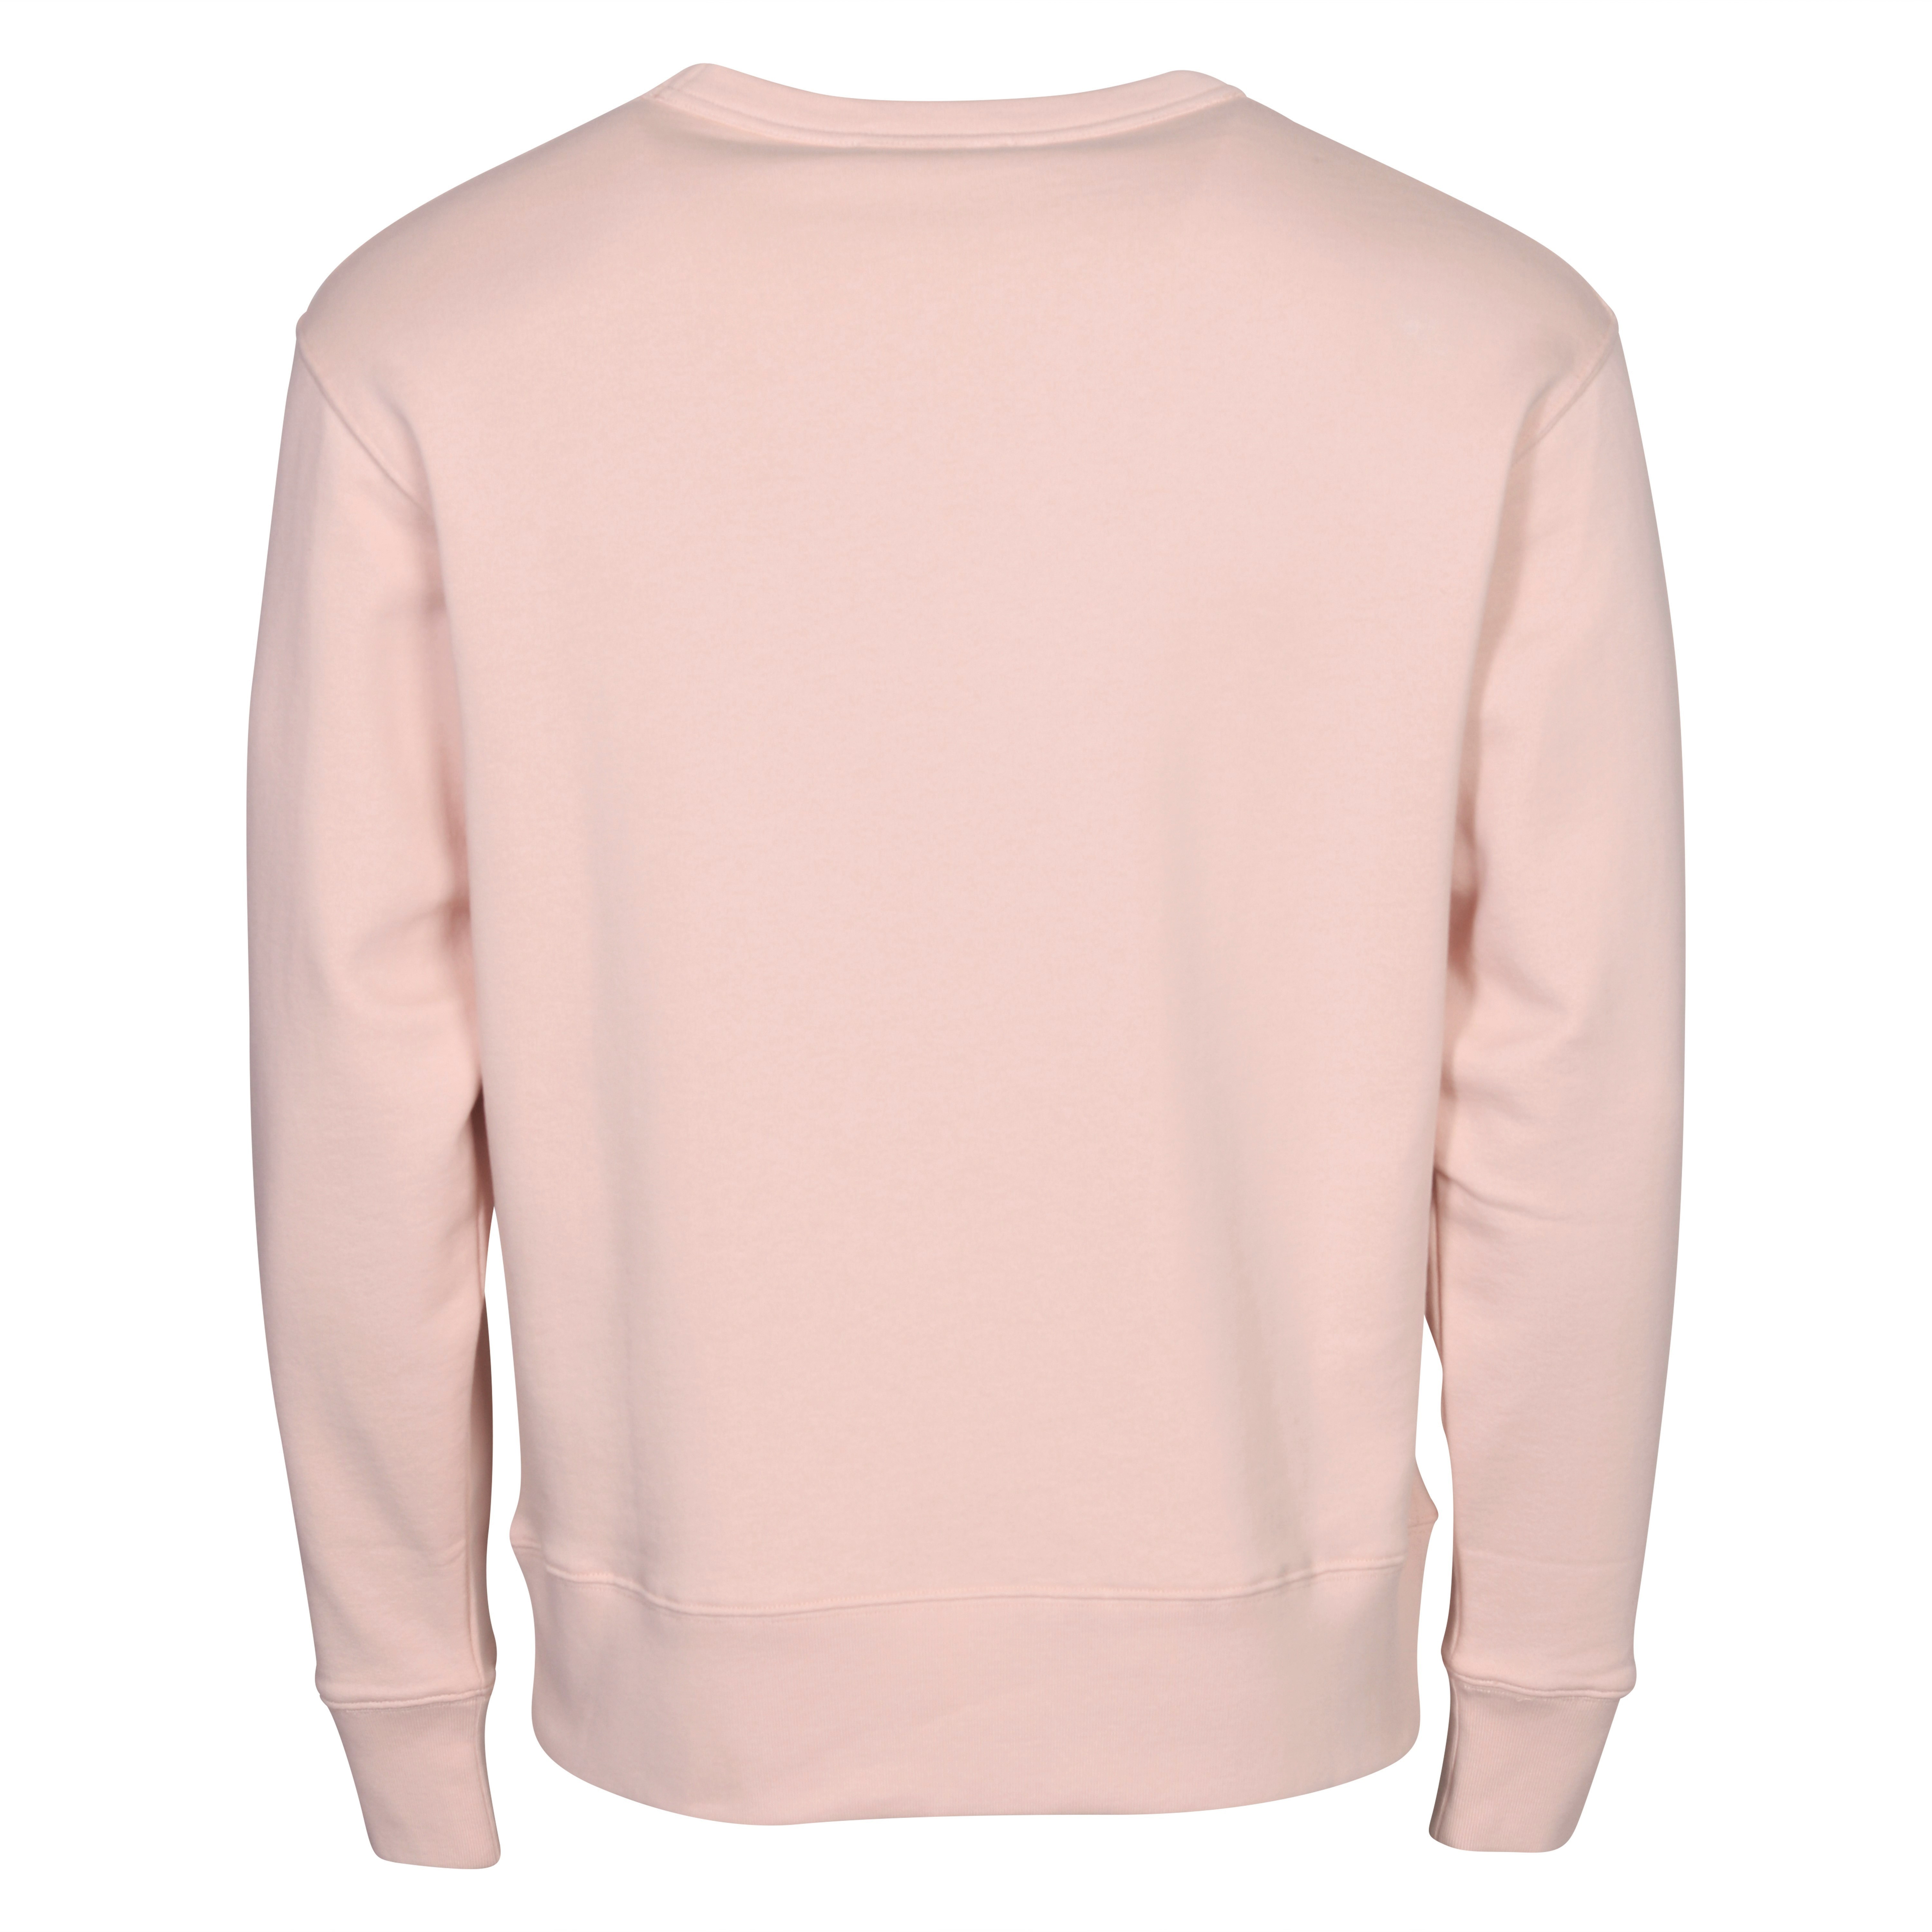 Acne Studios Face Sweatshirt in Powder Pink